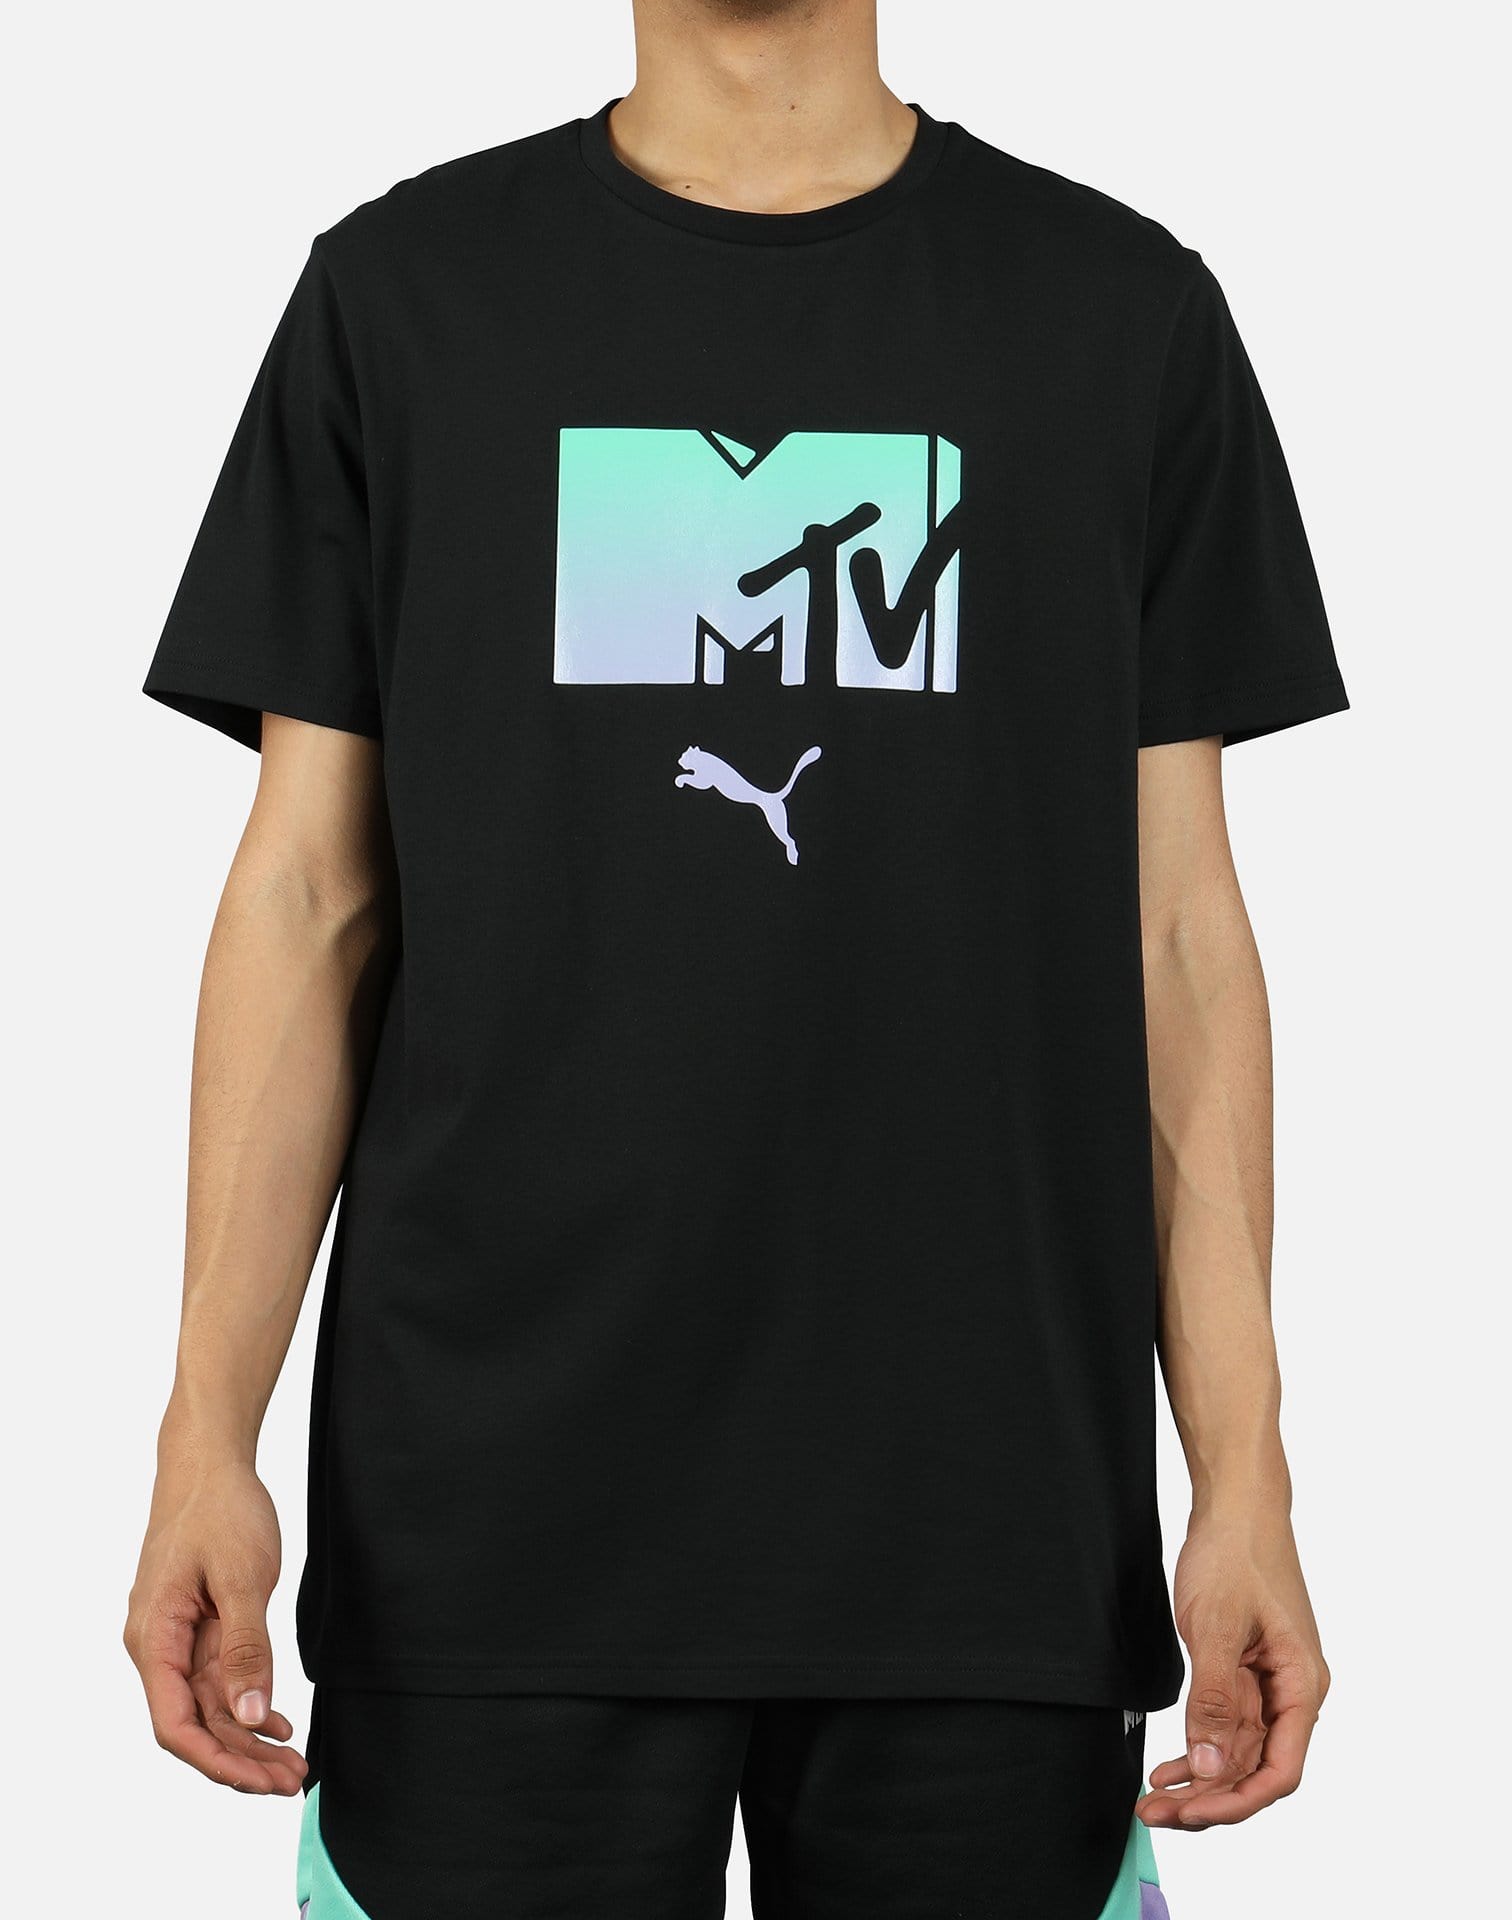 PUMA x MTV Men's Tee